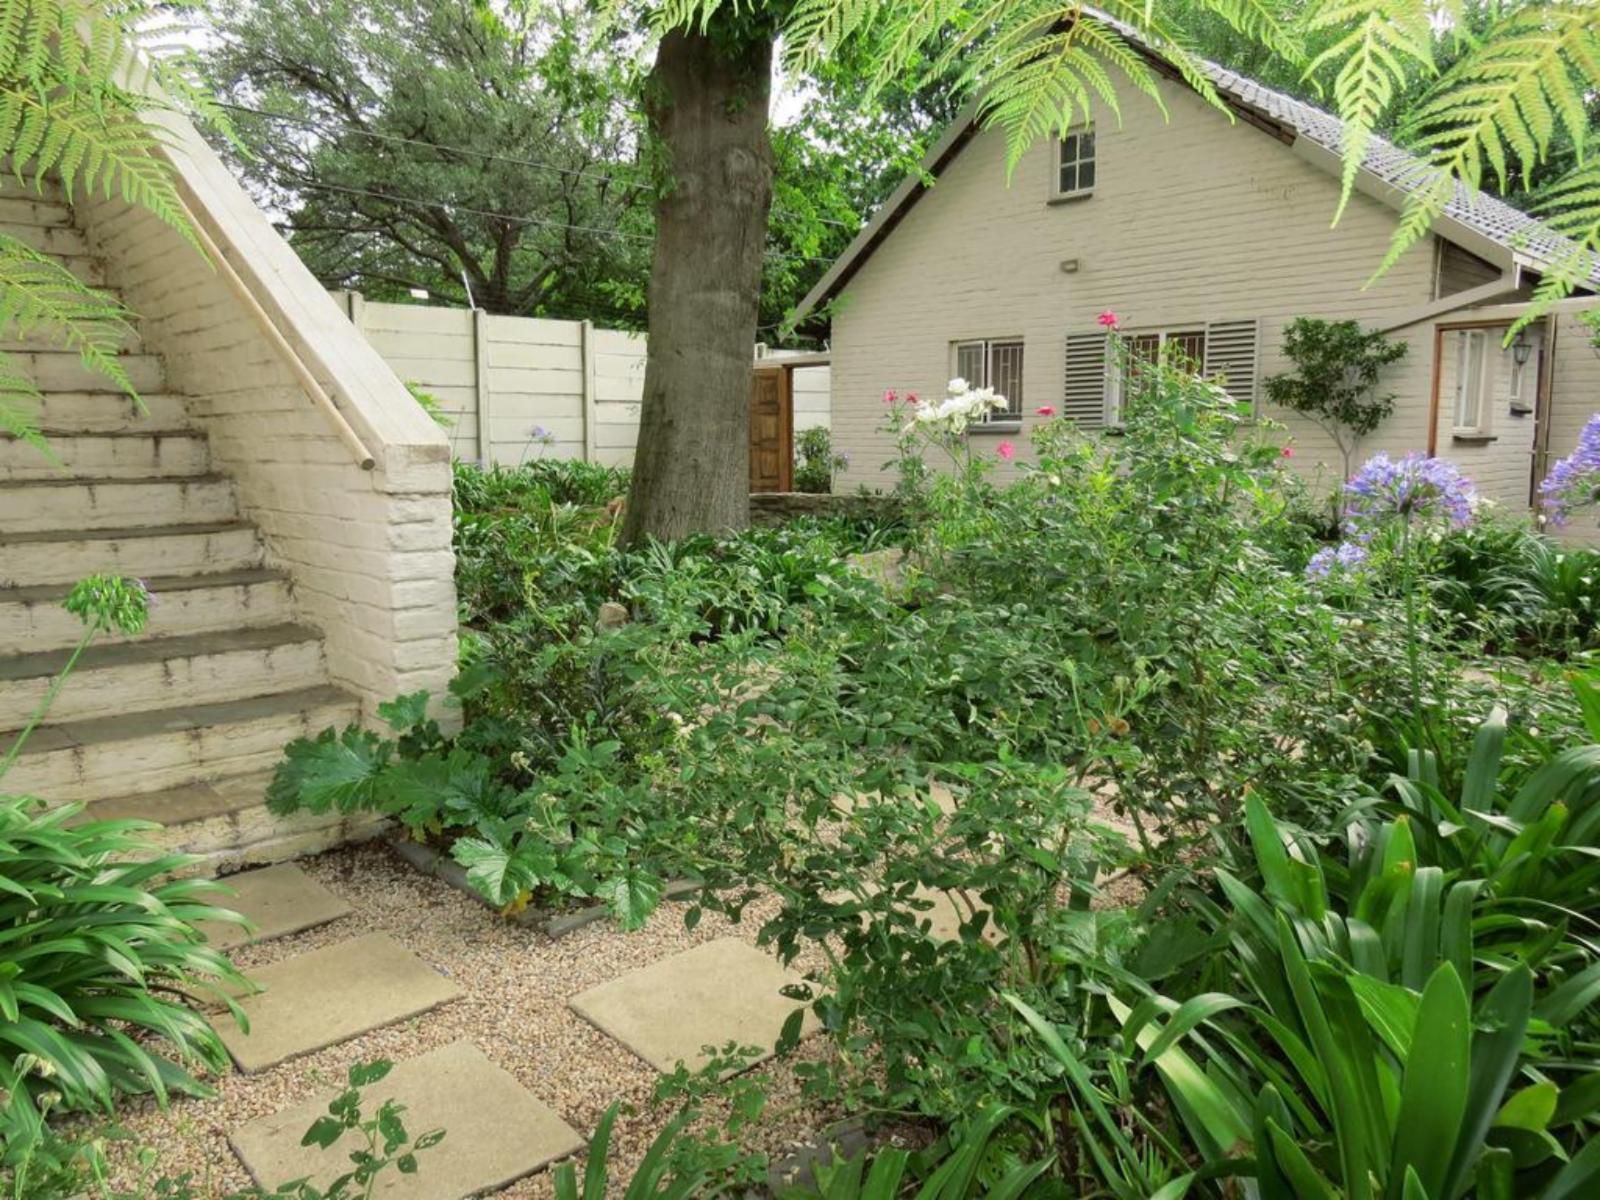 8 Landsdowne Bed And Breakfast Bryanston Johannesburg Gauteng South Africa House, Building, Architecture, Plant, Nature, Garden